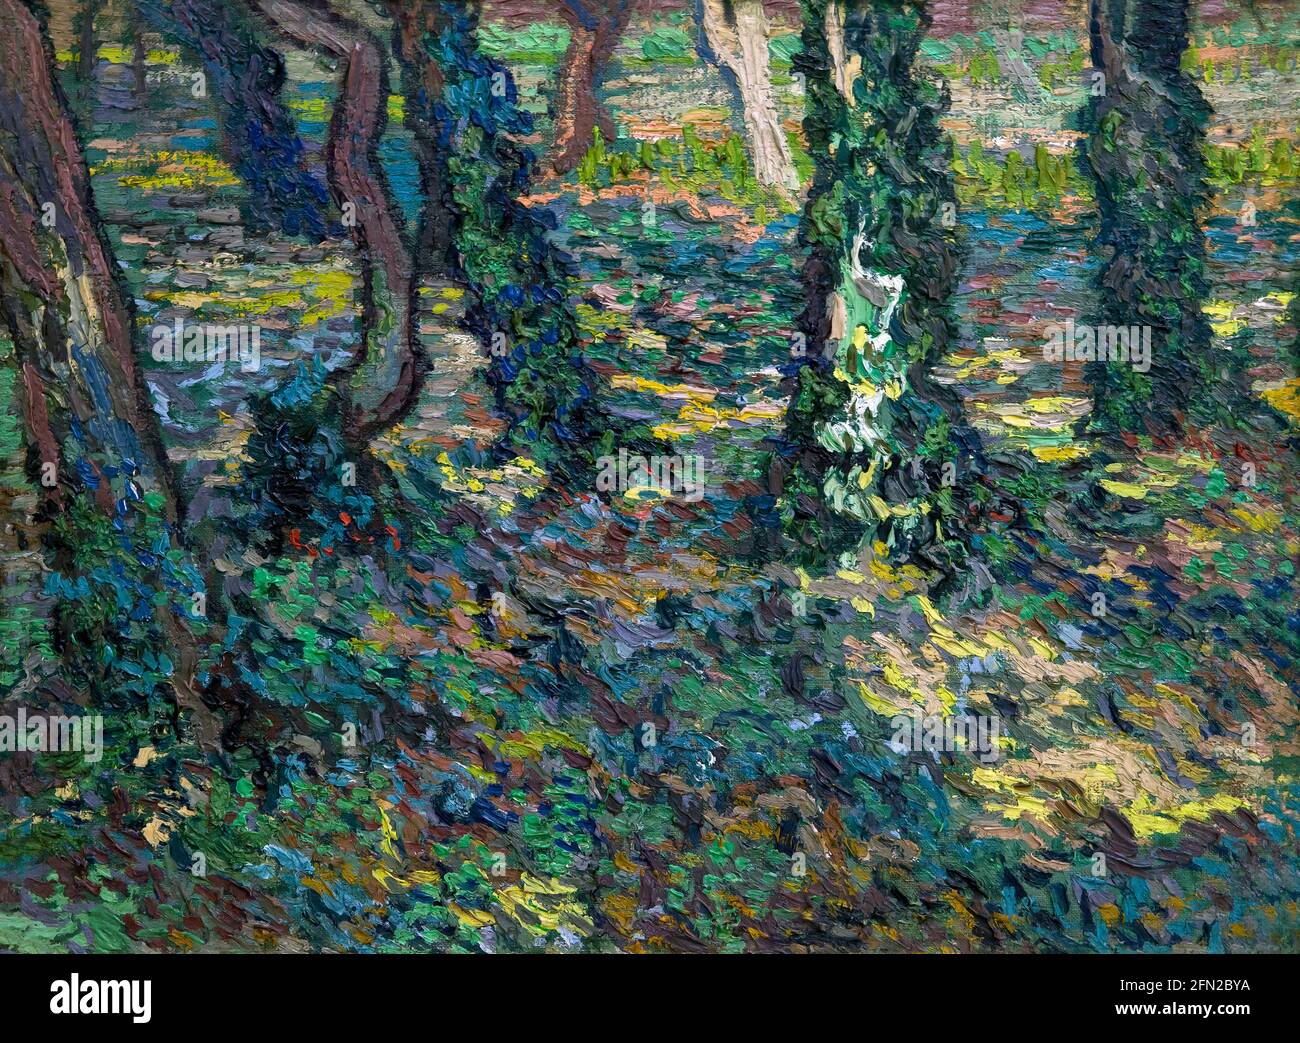 Trunks di albero con Ivy, Trunks di alberi con Ivy, Vincent van Gogh, 1889, Museo Kroller-Muller, Parco Nazionale di Hoge Veluwe, Otterlo, Paesi Bassi, Europa Foto Stock